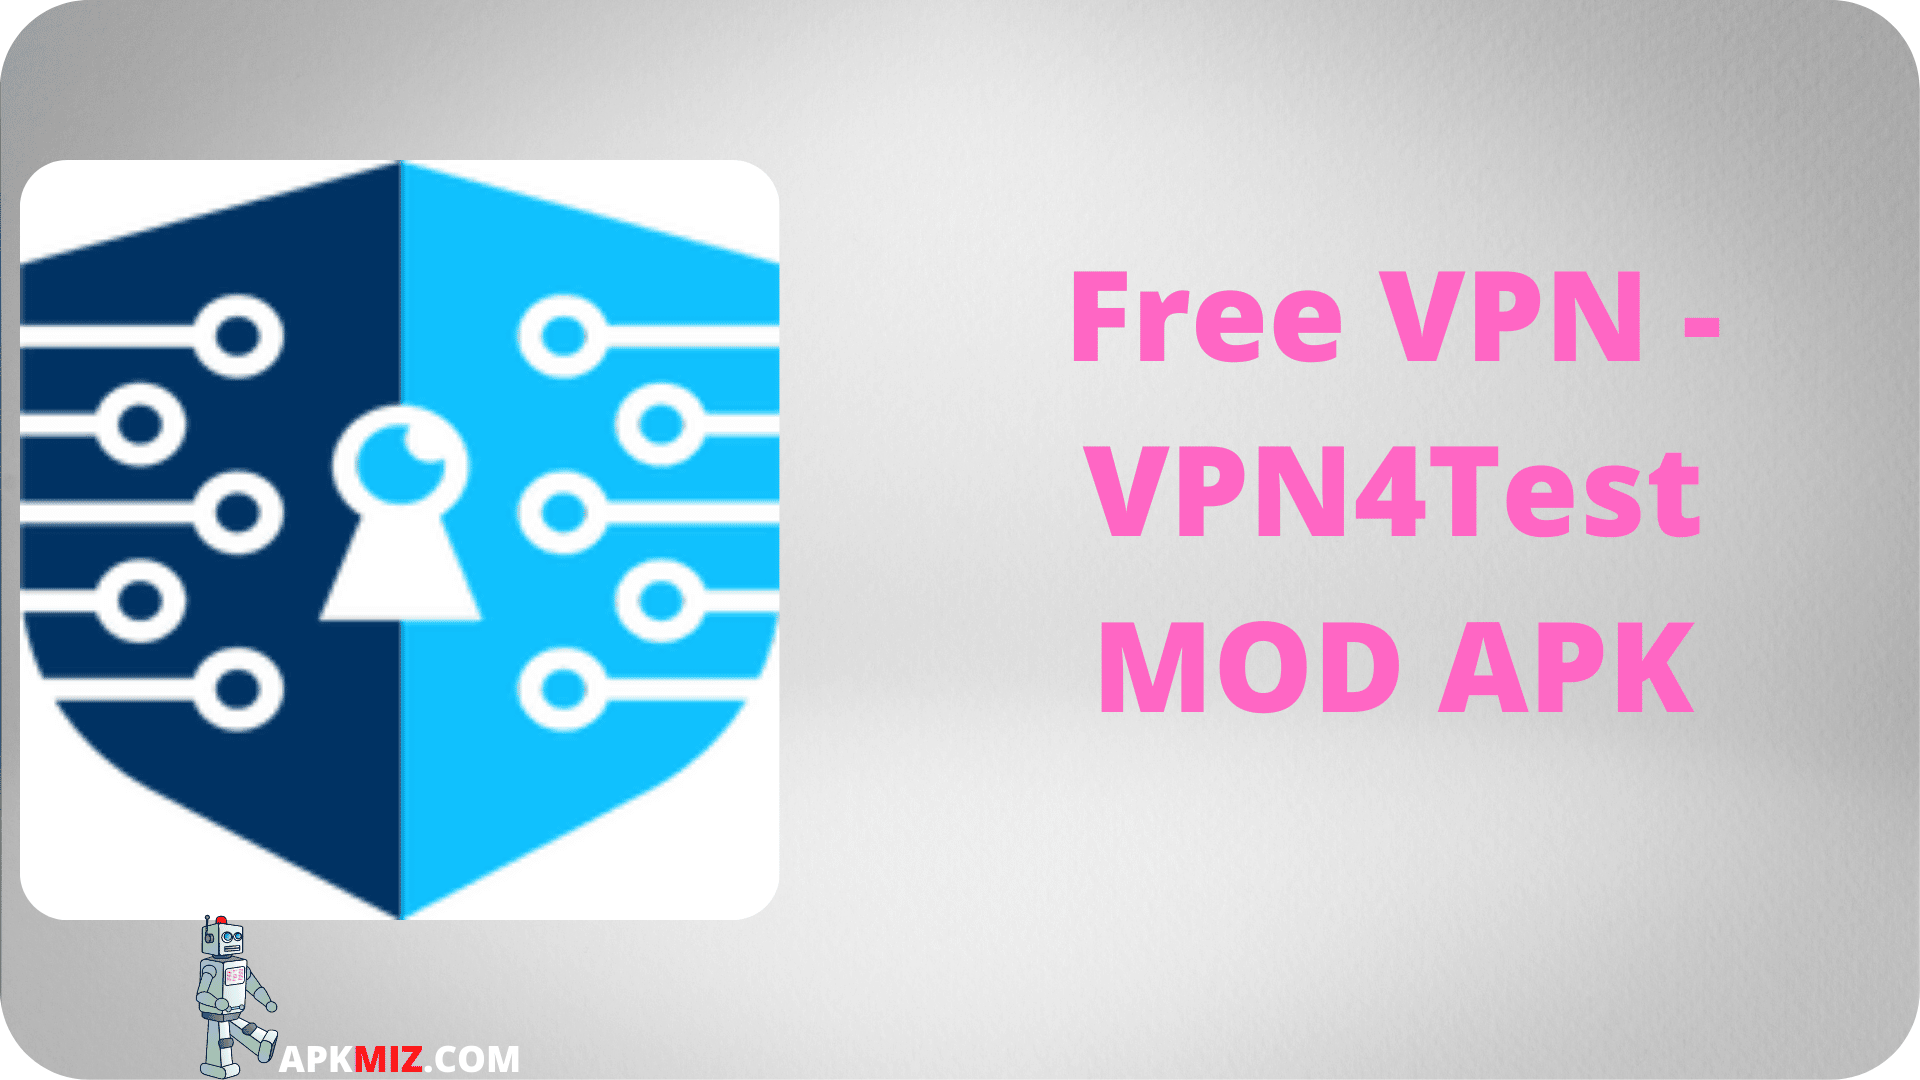 Free VPN - VPN4Test‏ MOD APK